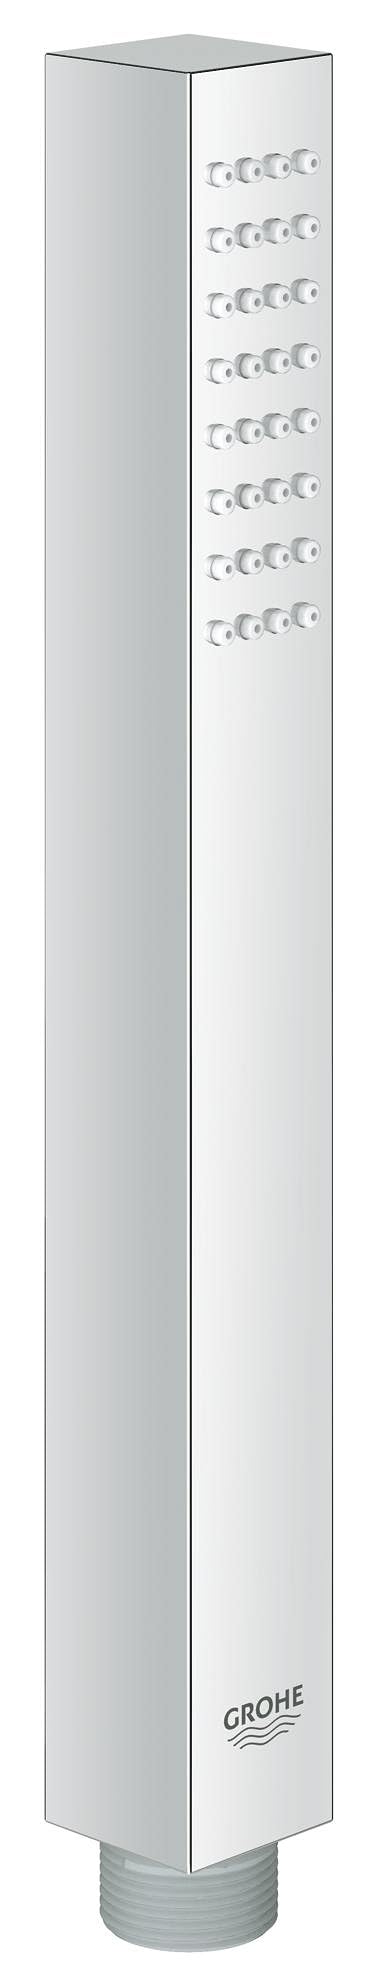 GROHE Euphoria Cube Stick - Handbrause (1 Strahlart, perfektes Strahlbild, Antikalk- System, langlebig), chrom, 27698000